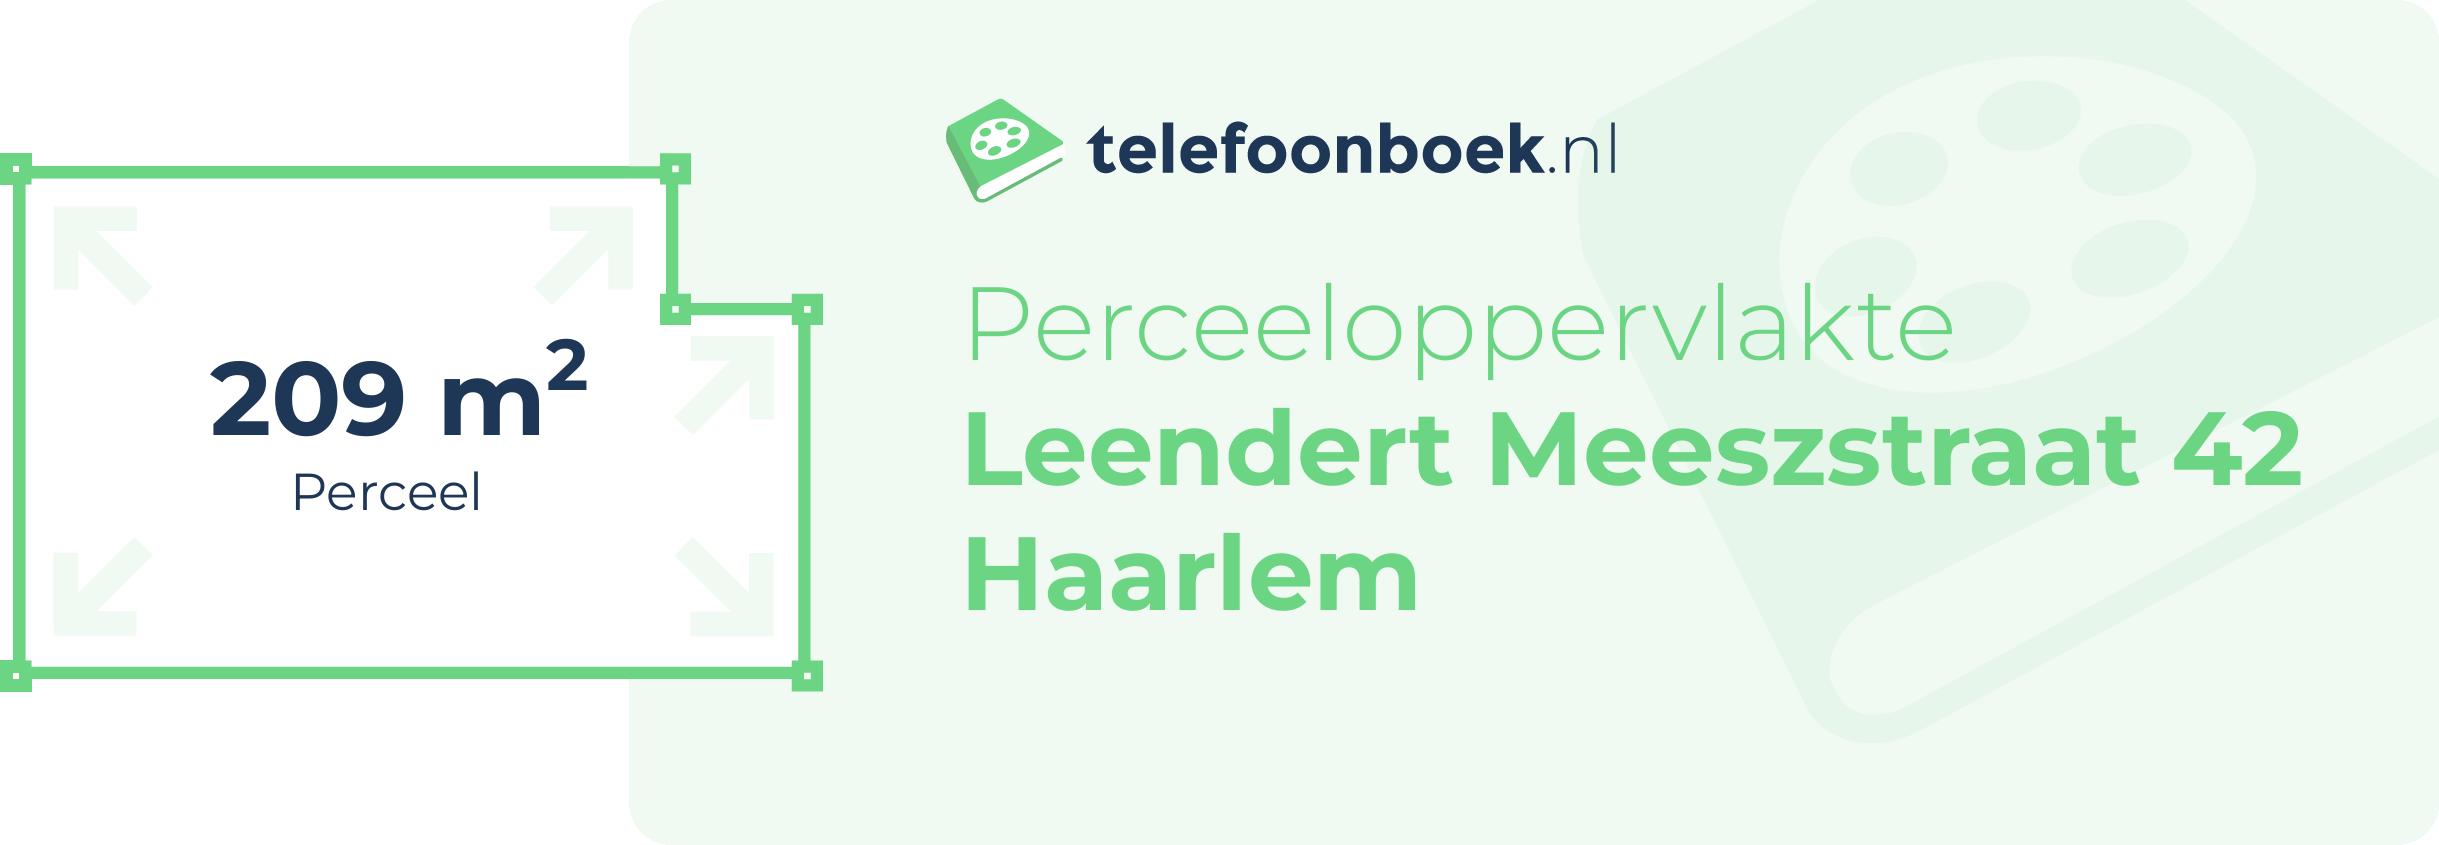 Perceeloppervlakte Leendert Meeszstraat 42 Haarlem